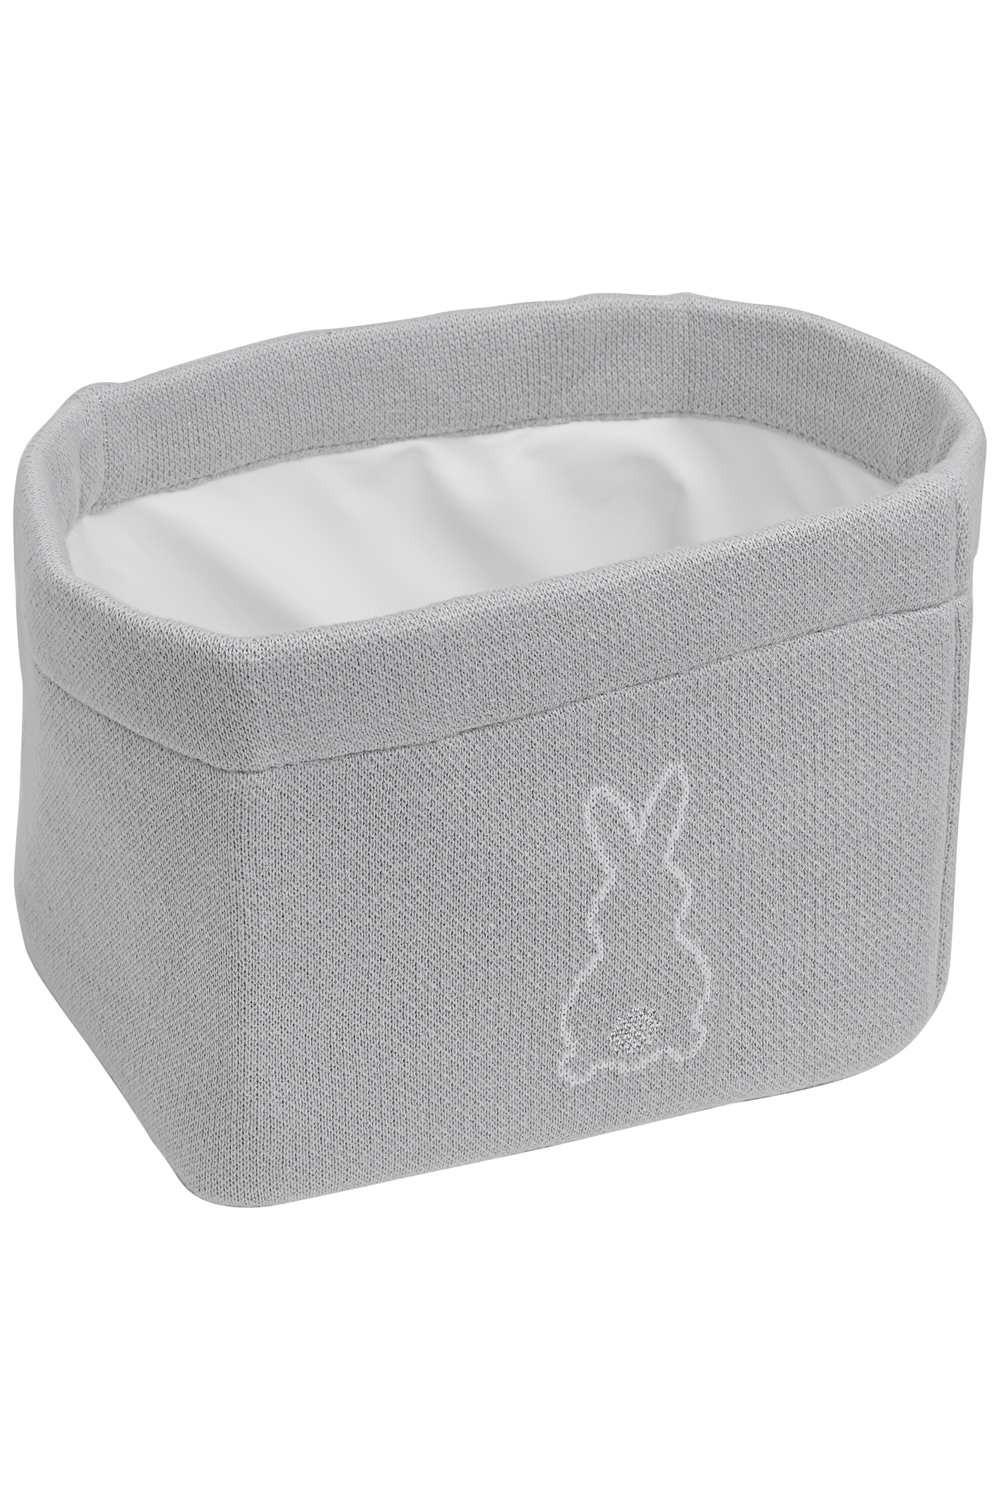 Nursery basket Rabbit - silver - Small